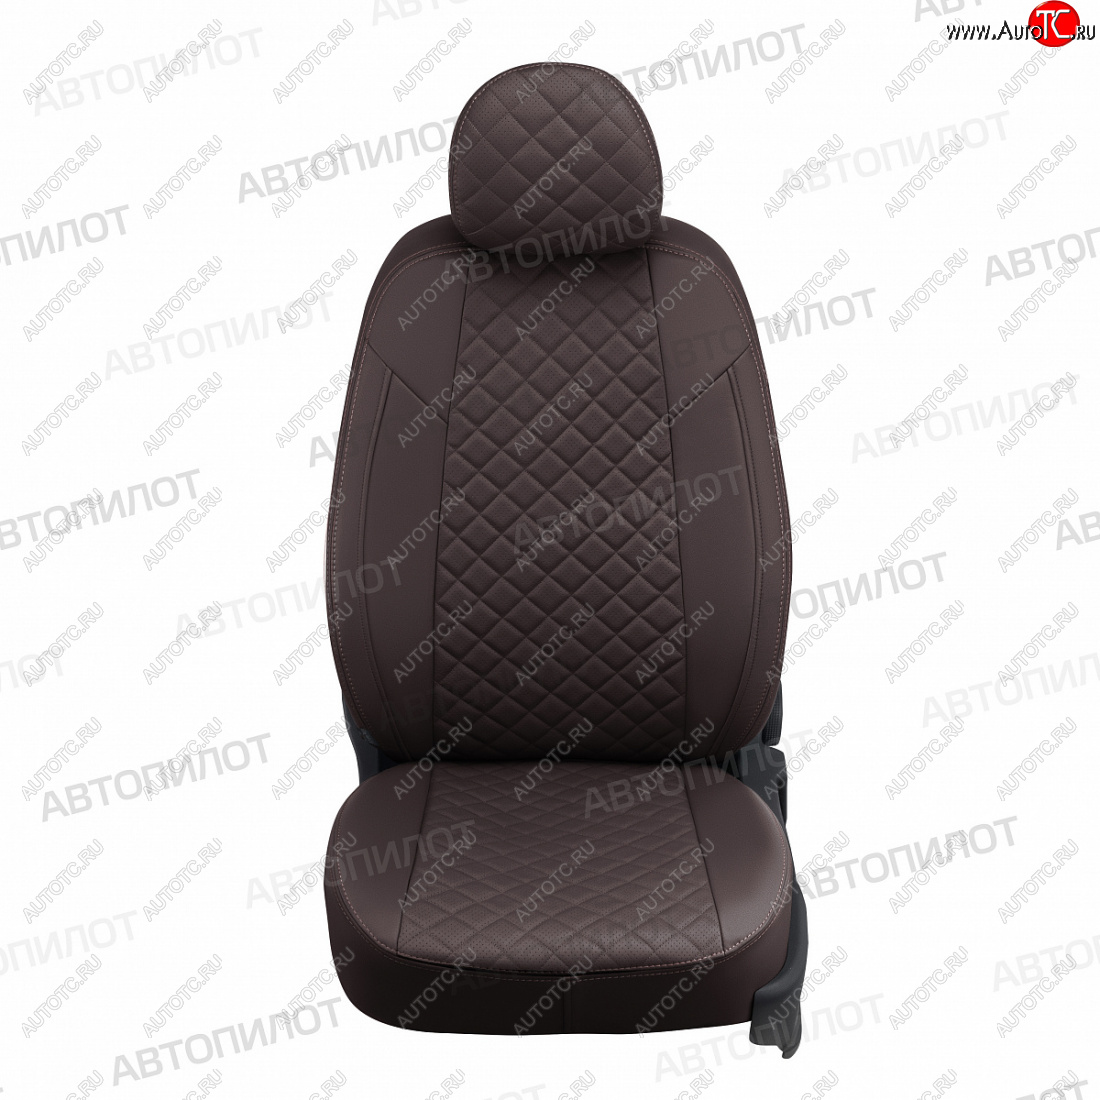 13 999 р. Чехлы сидений (экокожа) Автопилот Ромб  Ford Mondeo (2000-2007) (шоколад)